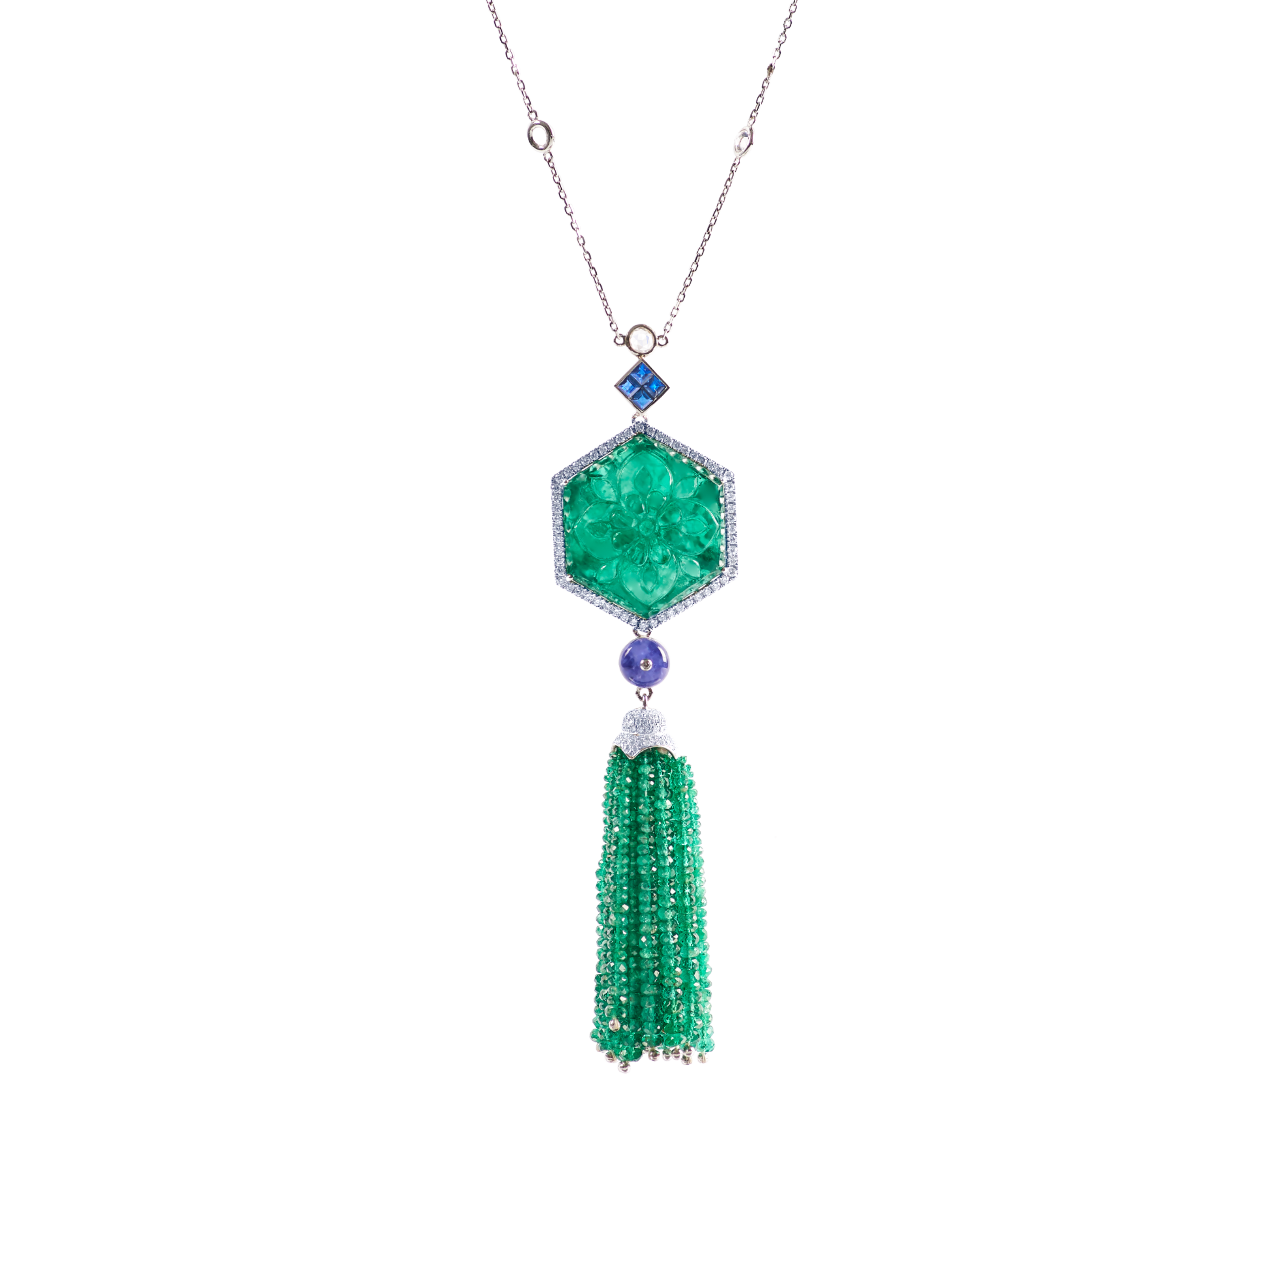 尚比亞雕刻祖母綠與藍寶墜鍊 95.63克拉
Zambia Carved Emerald、
Sapphire And Diamond Pendant
Necklace